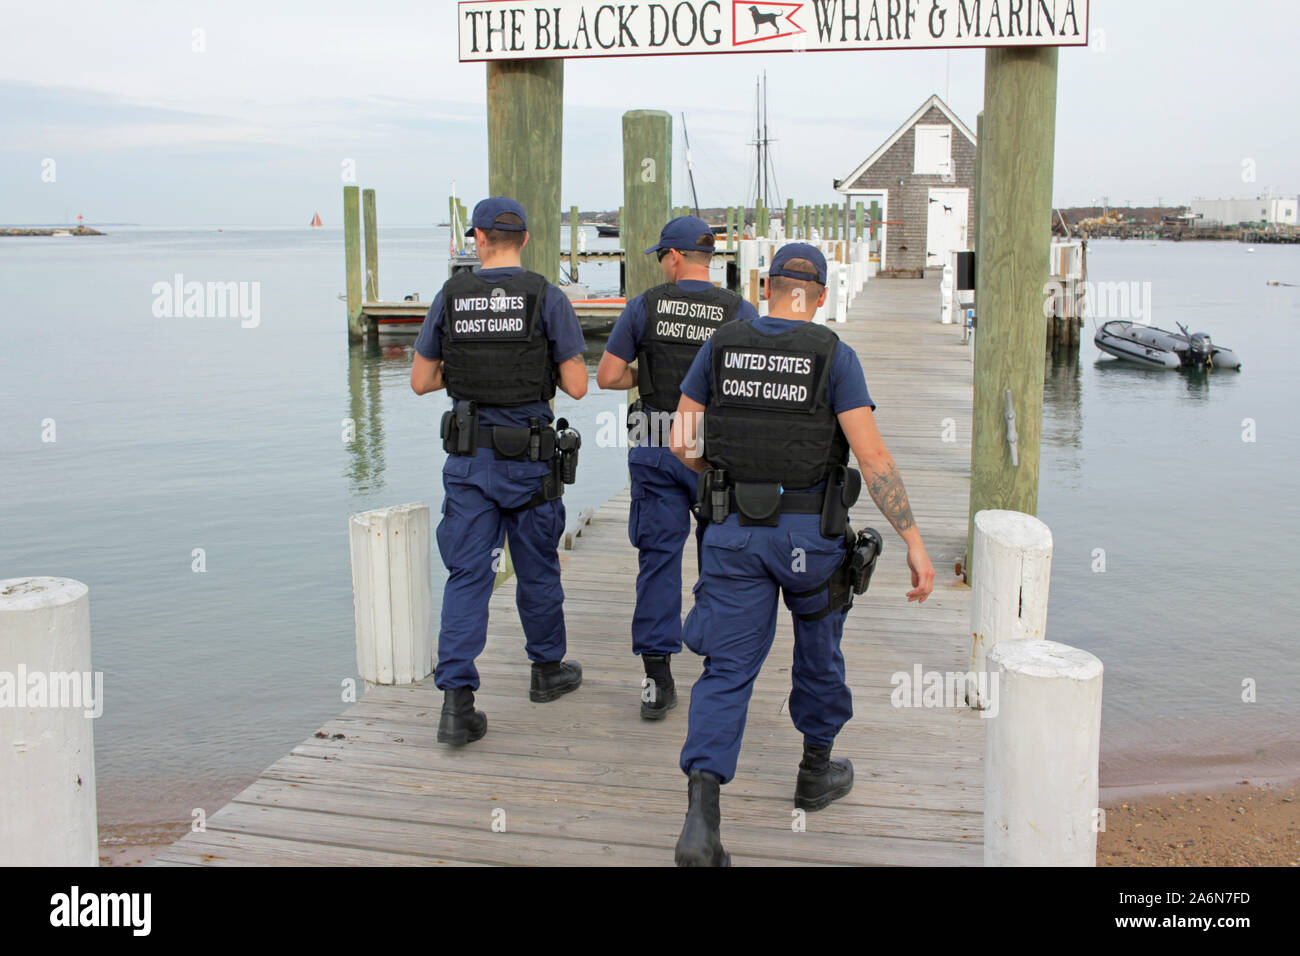 United States Coast Guard officers at Black Dog Wharf, Vineyard Haven, Martha’s Vineyard, Massachusetts, USA Stock Photo